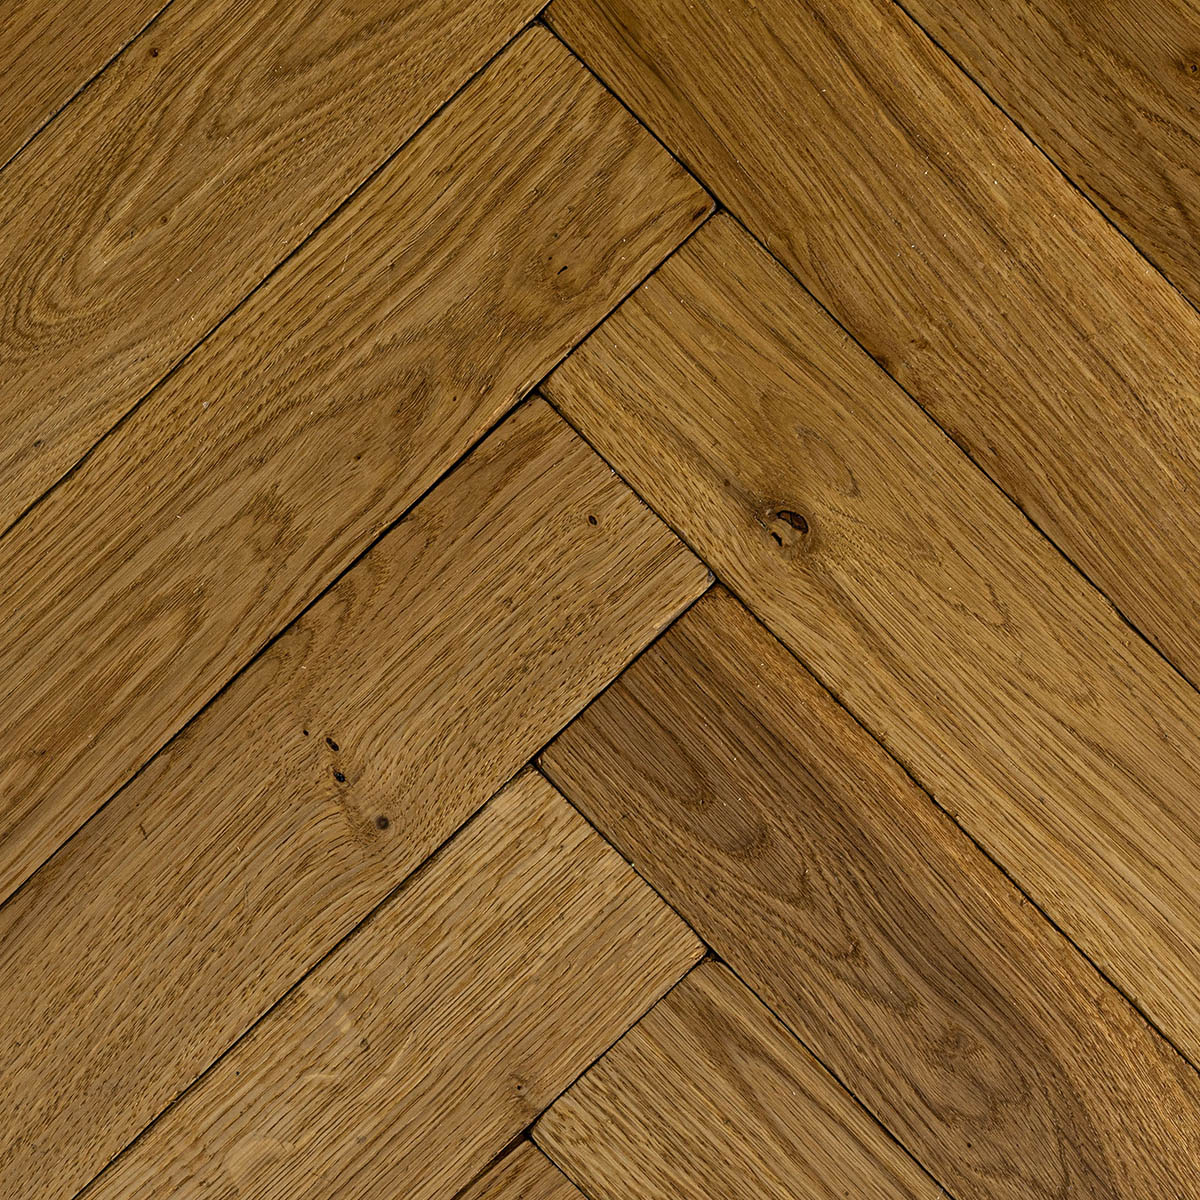 Malton Mews - Solid Oak Parquet Floor 300mm x 70mm